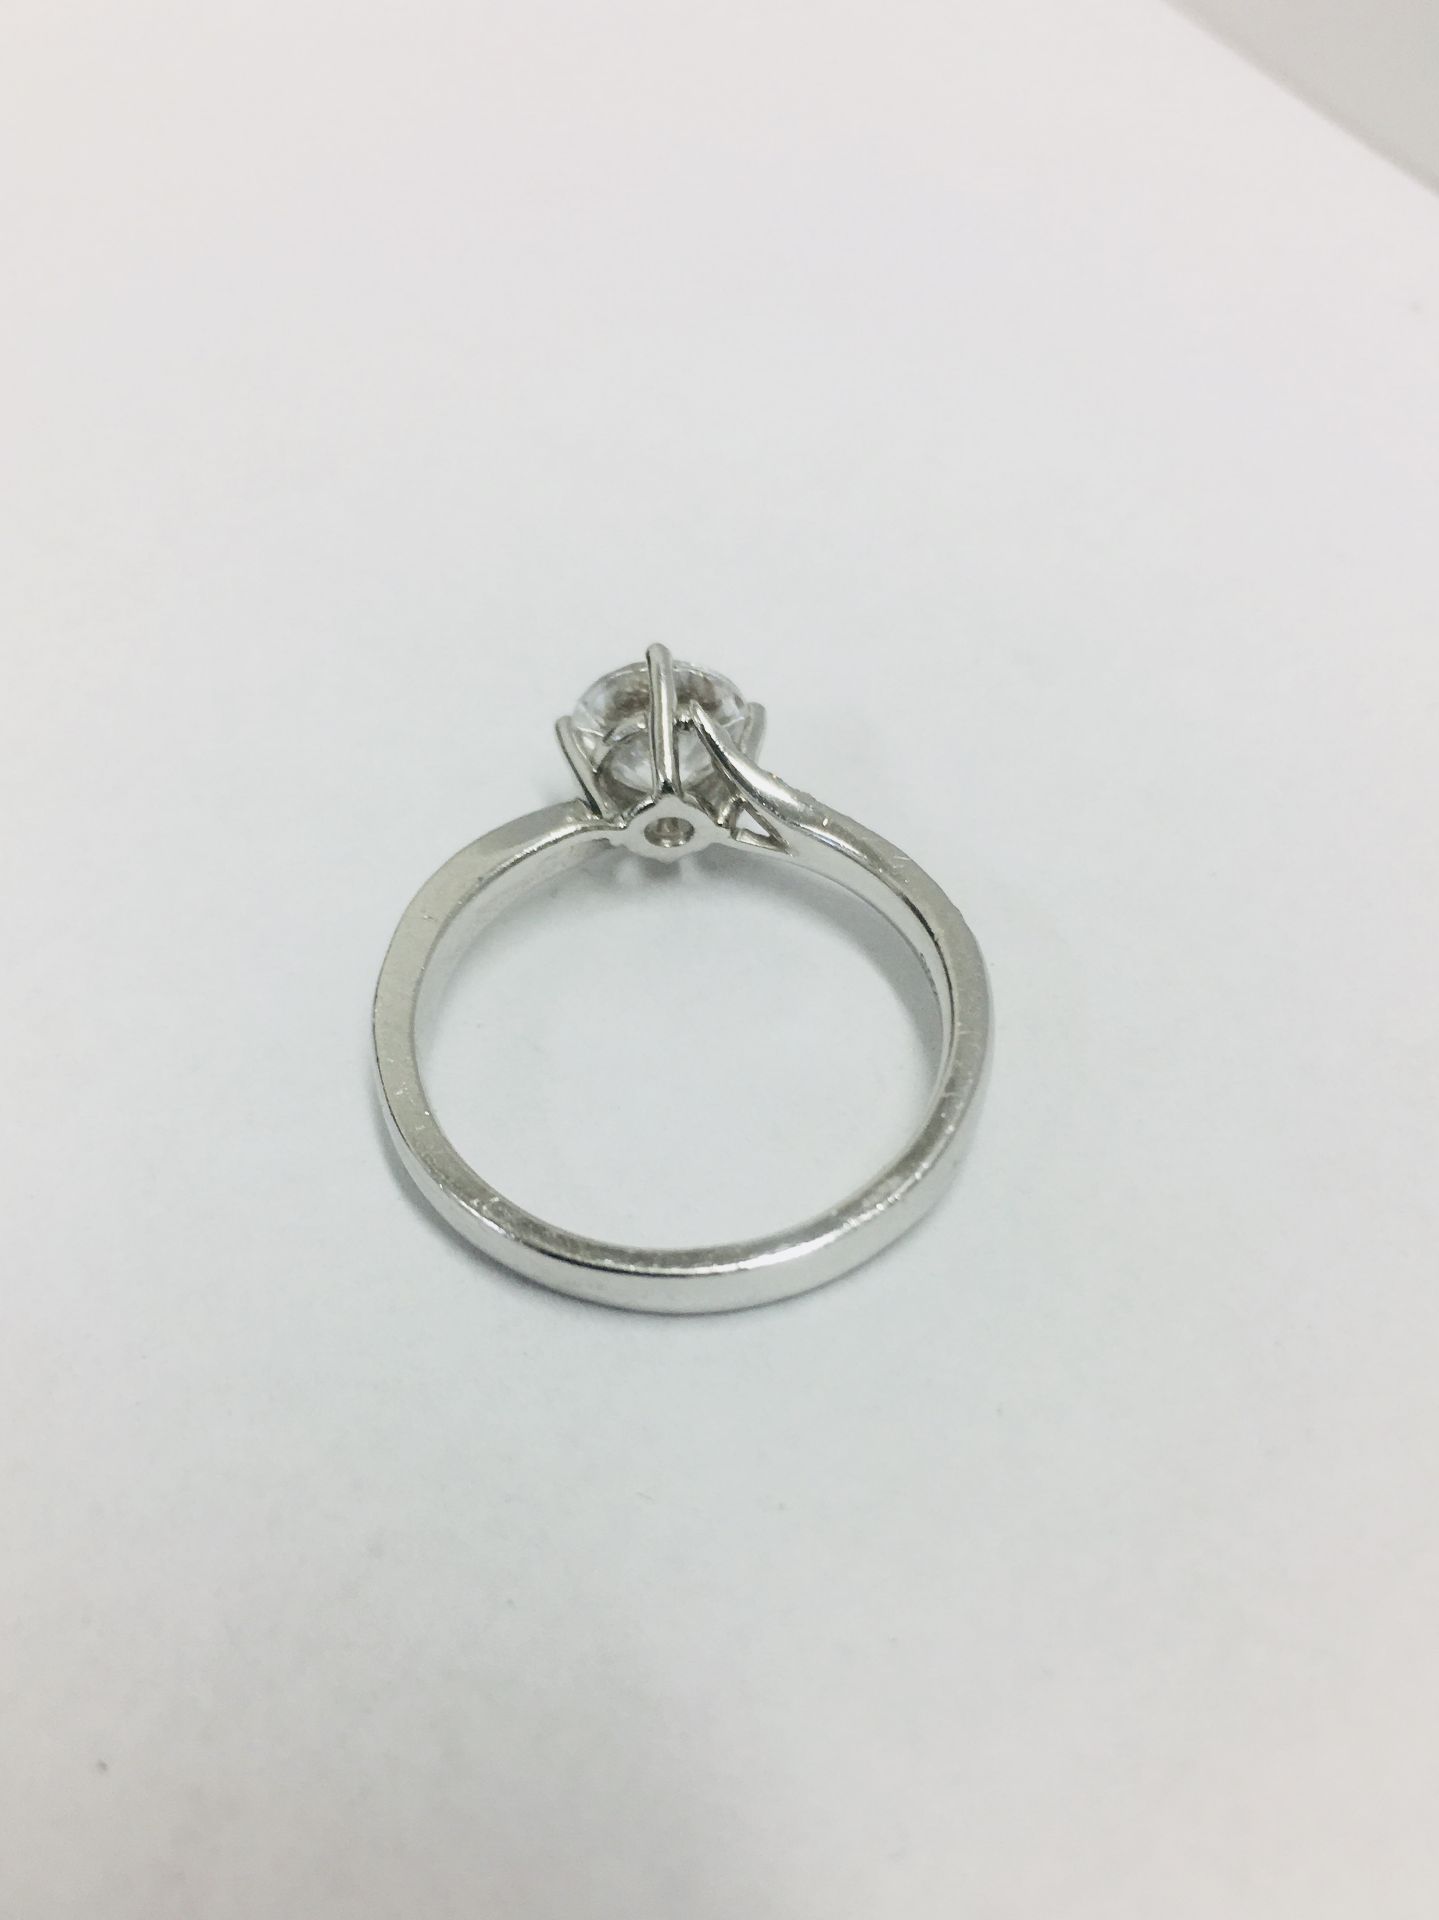 Platinum twist diamond solitaire ring,0.50ct brilliant cut diamond,D colour vs clarity,,3.5 gms - Image 5 of 7